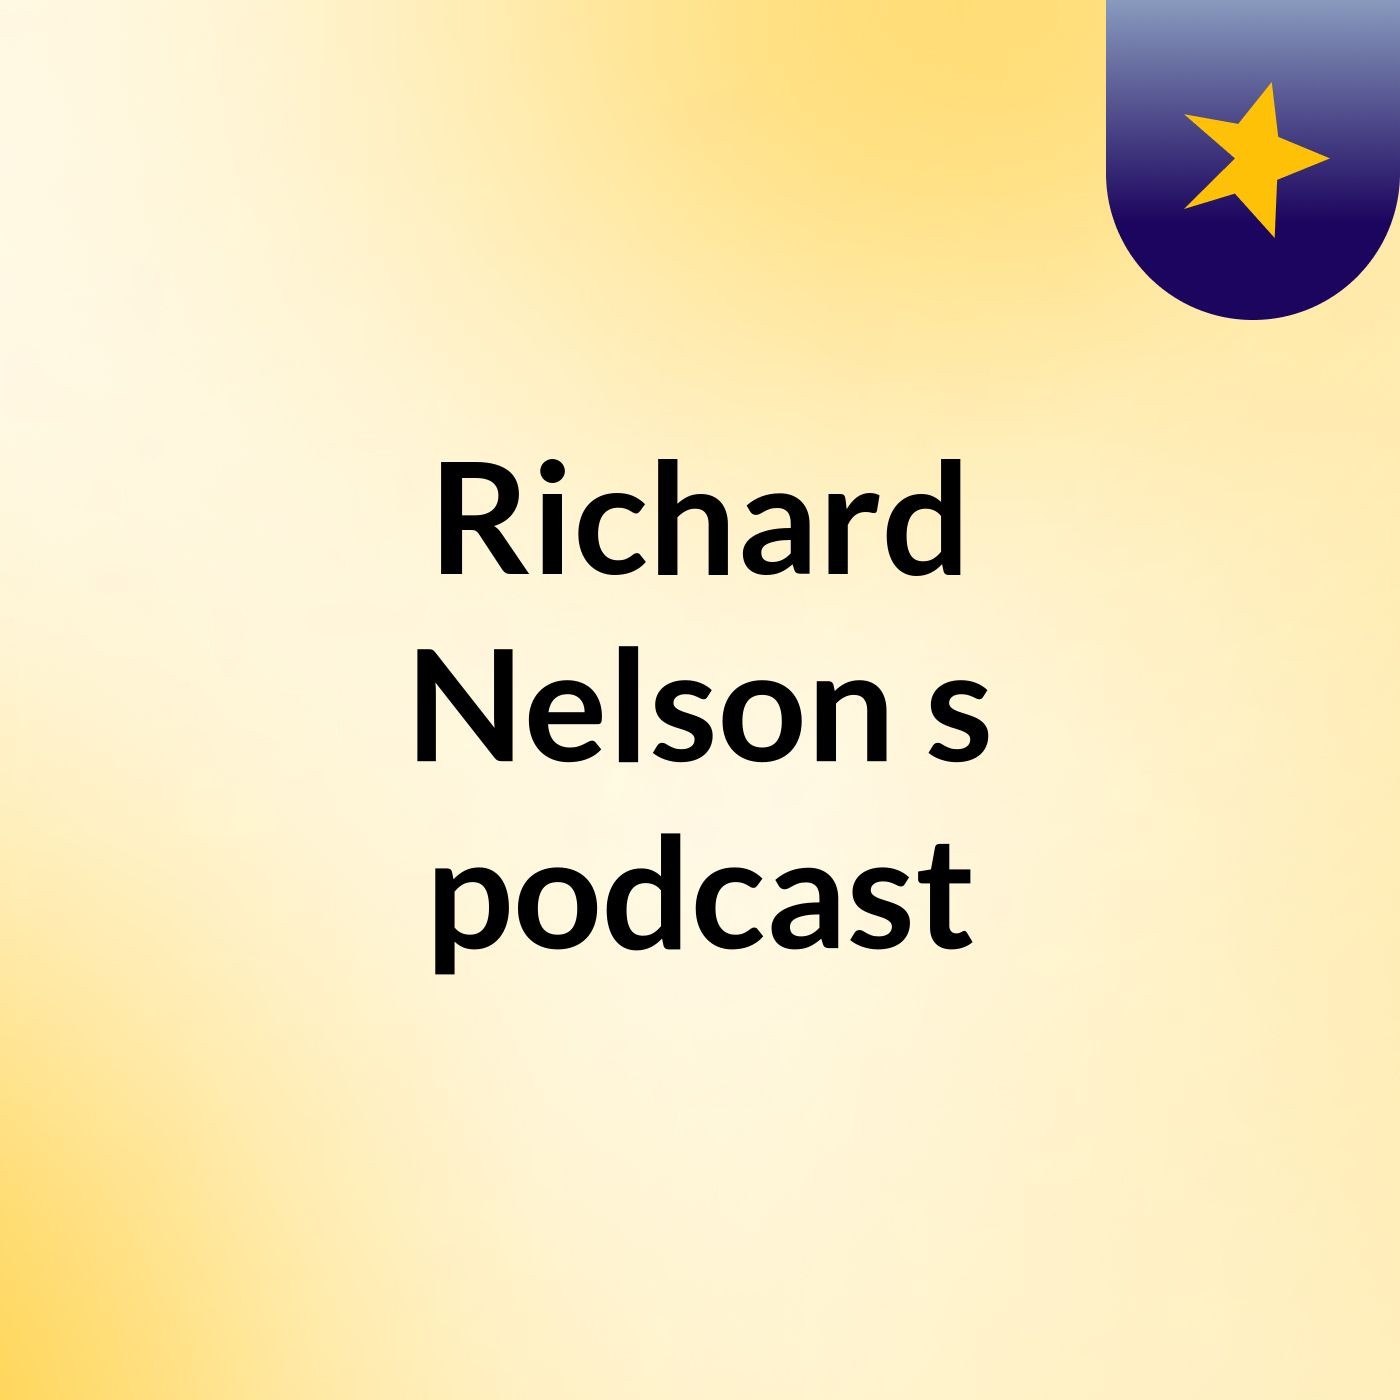 Episode 6 - Richard Nelson's podcast